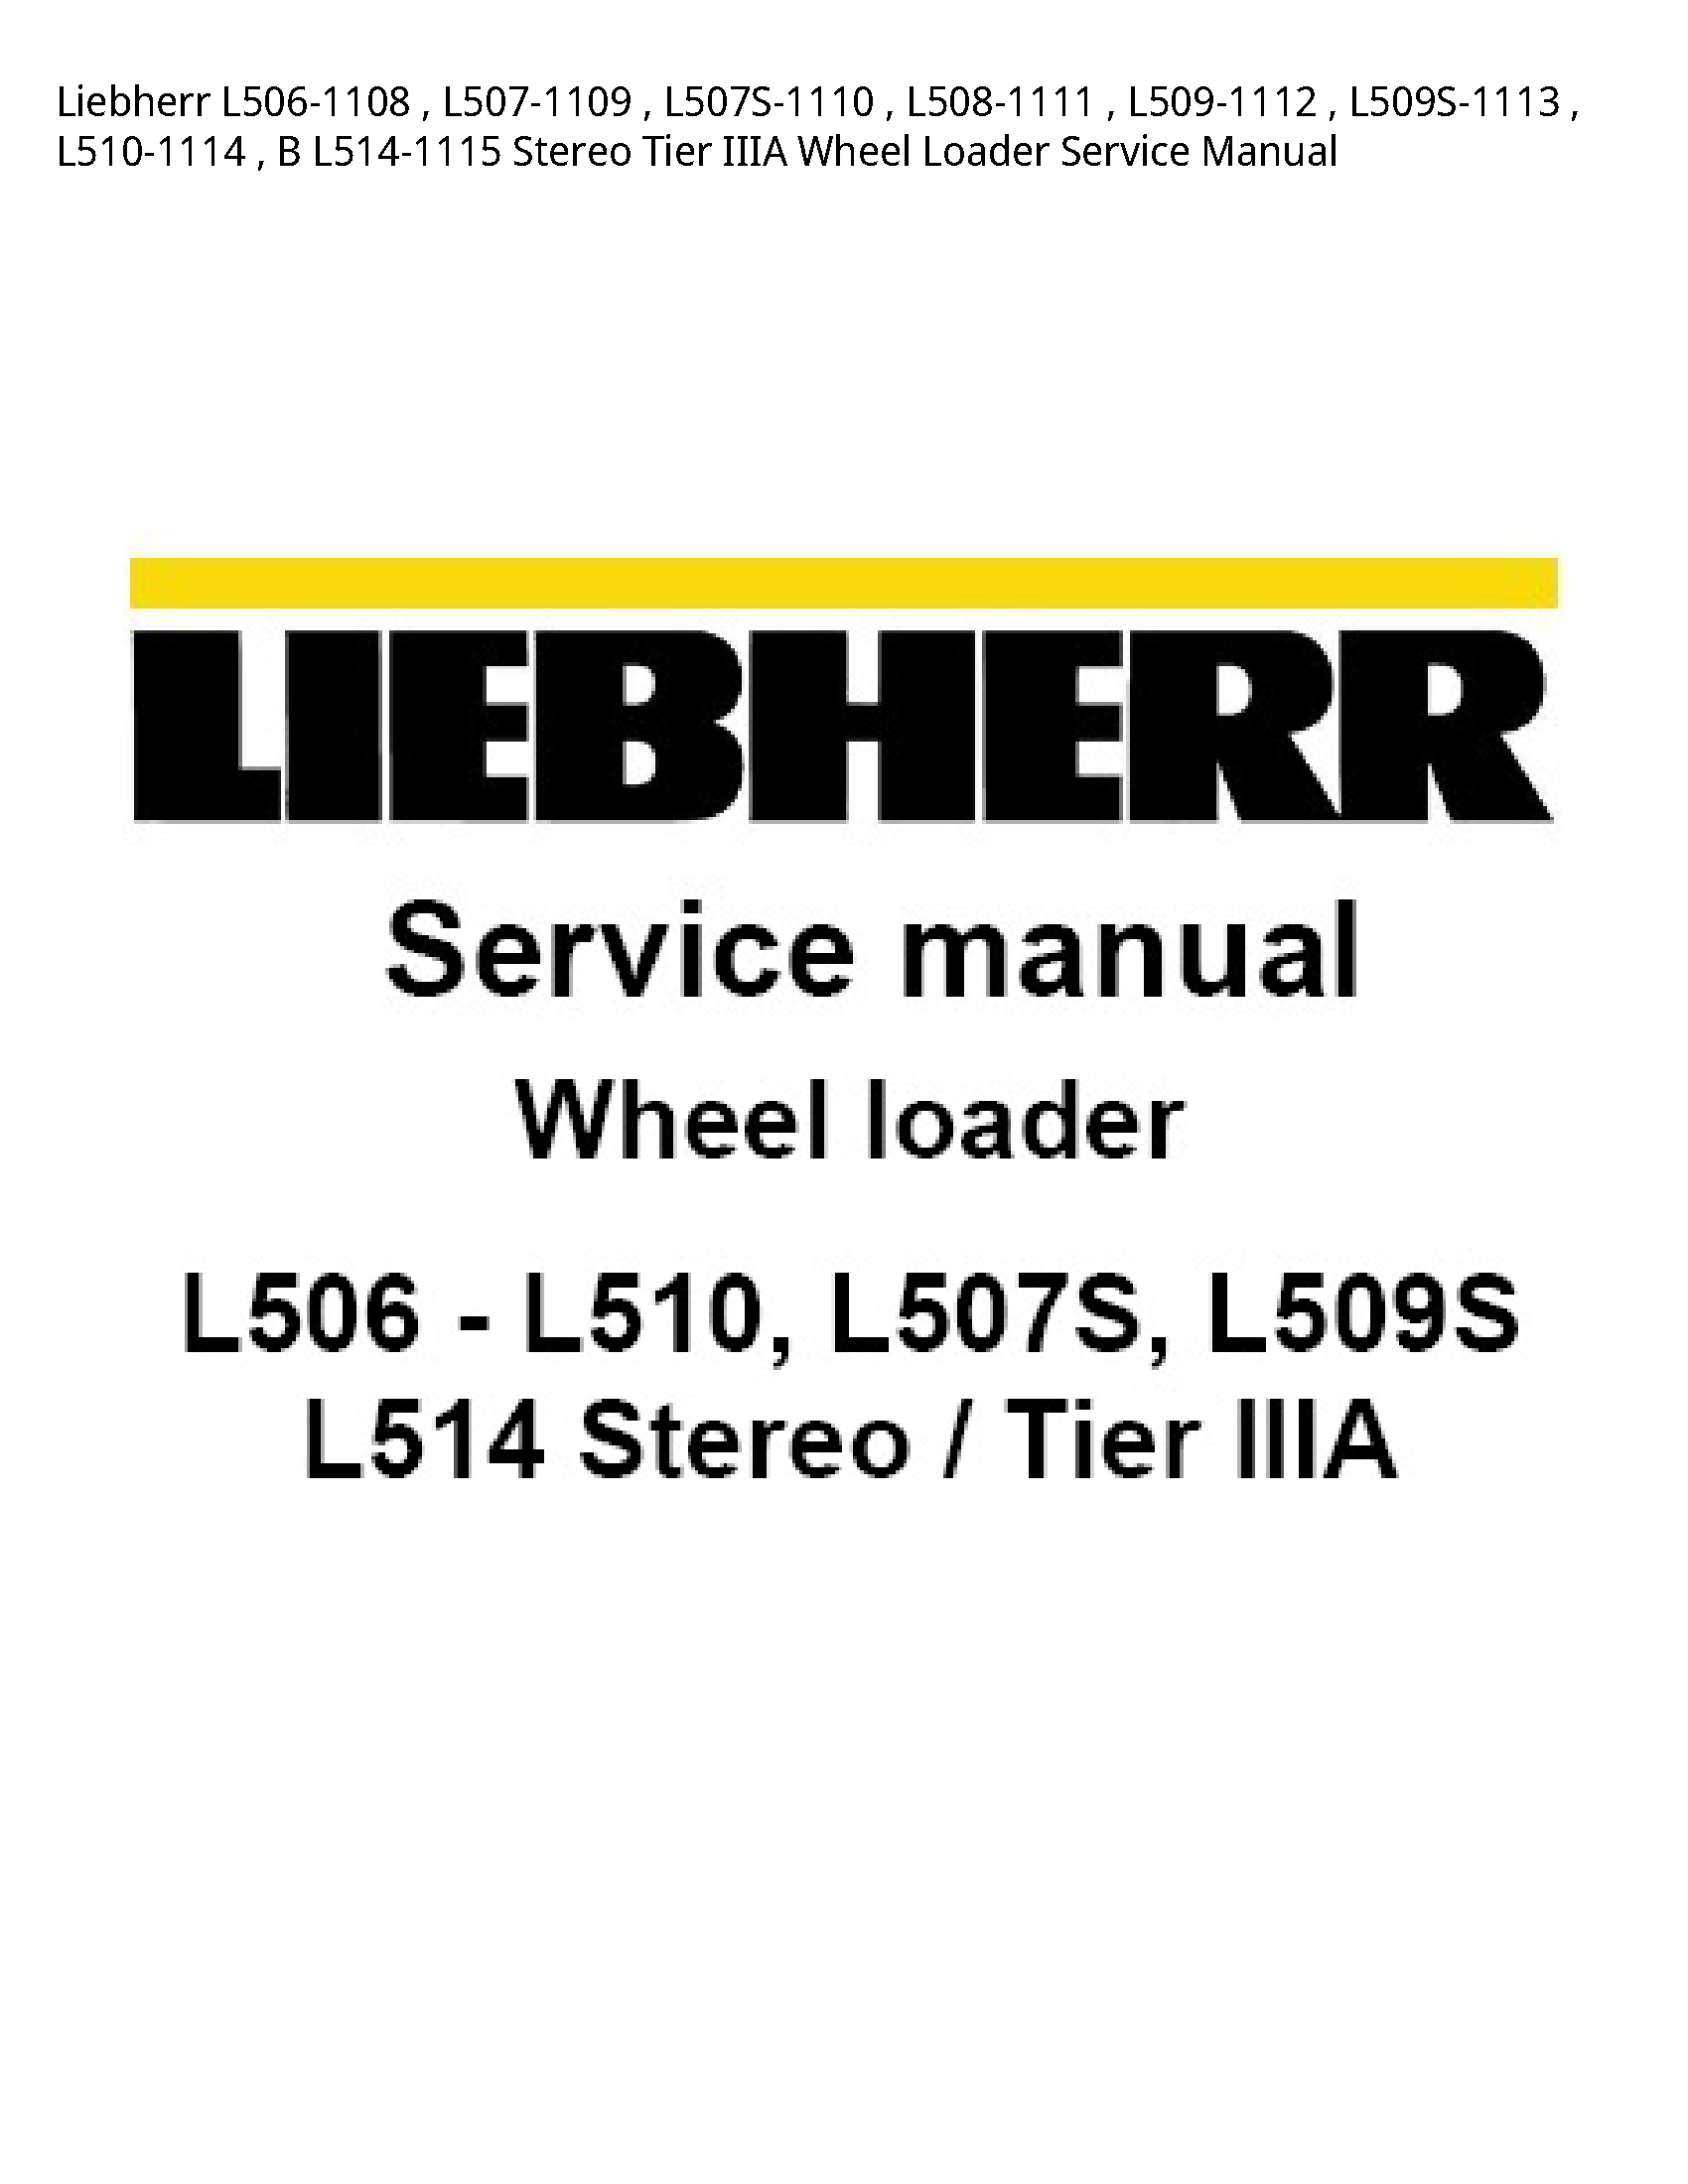 Liebherr L506-1108 Stereo Tier IIIA Wheel Loader manual